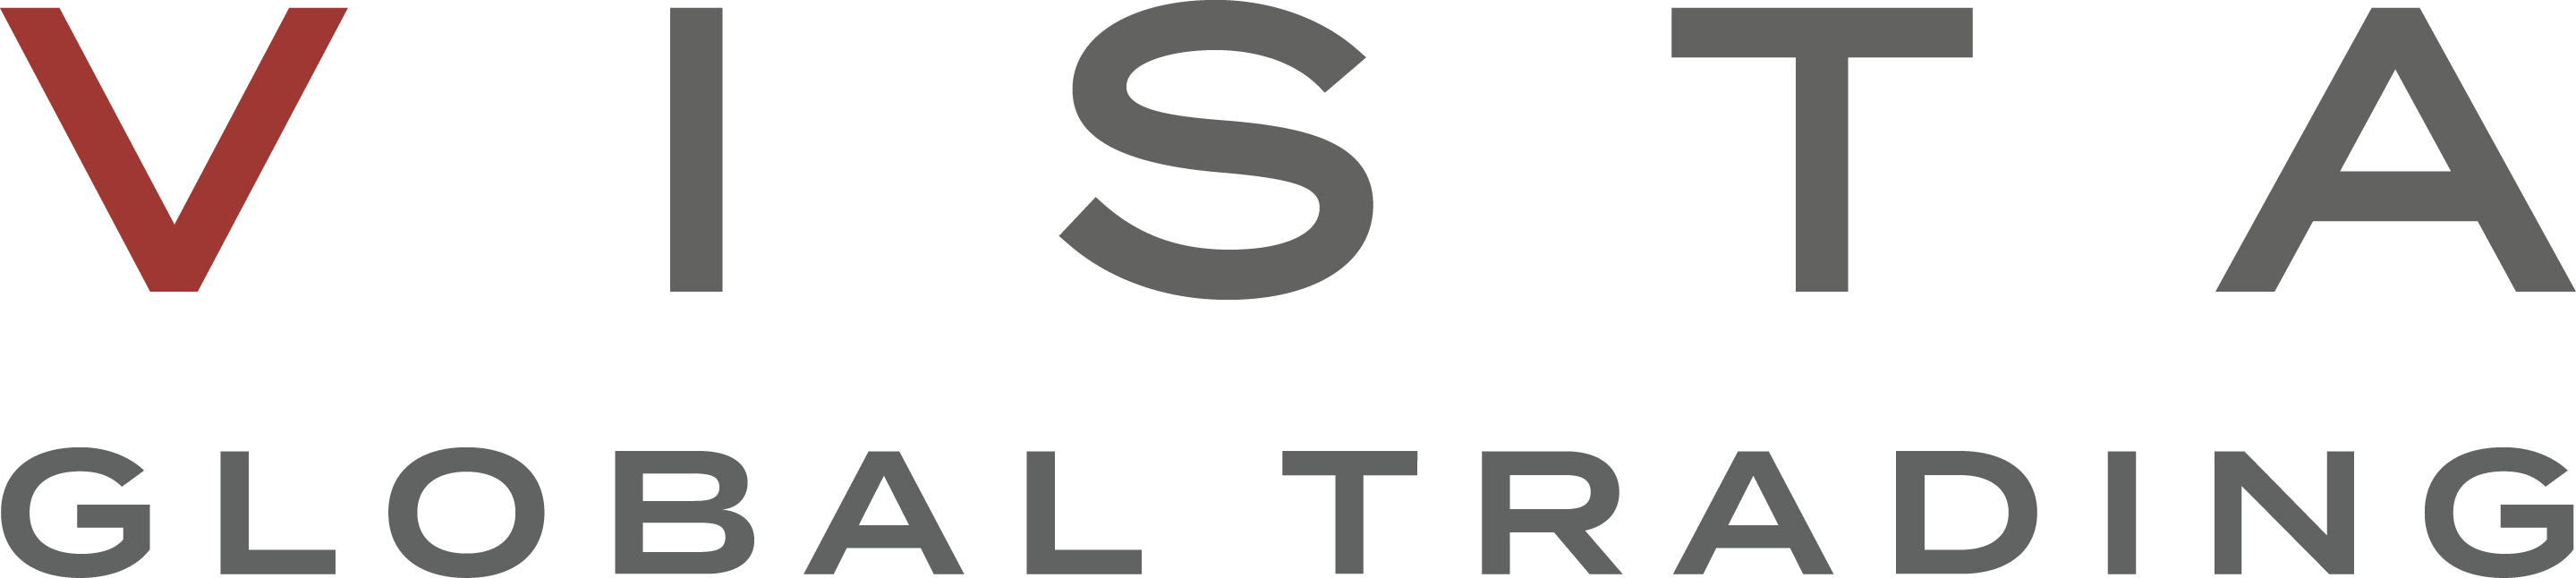 Vista Global Trading logo